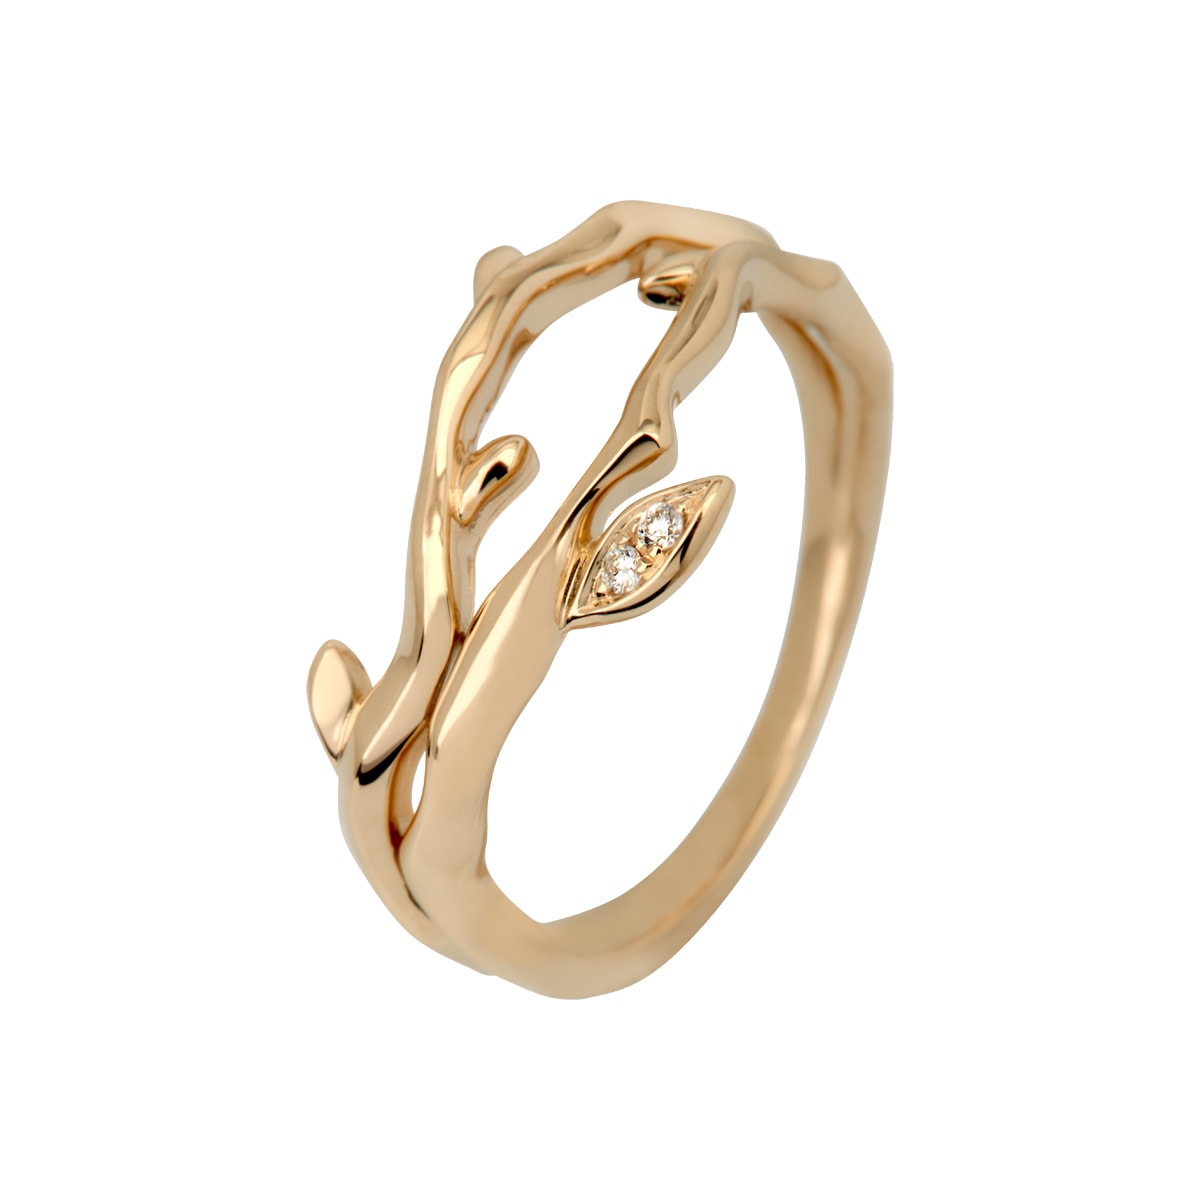 Catch Medium Ring 14K Gold | Dirks Jewellery Dirks Jewellery